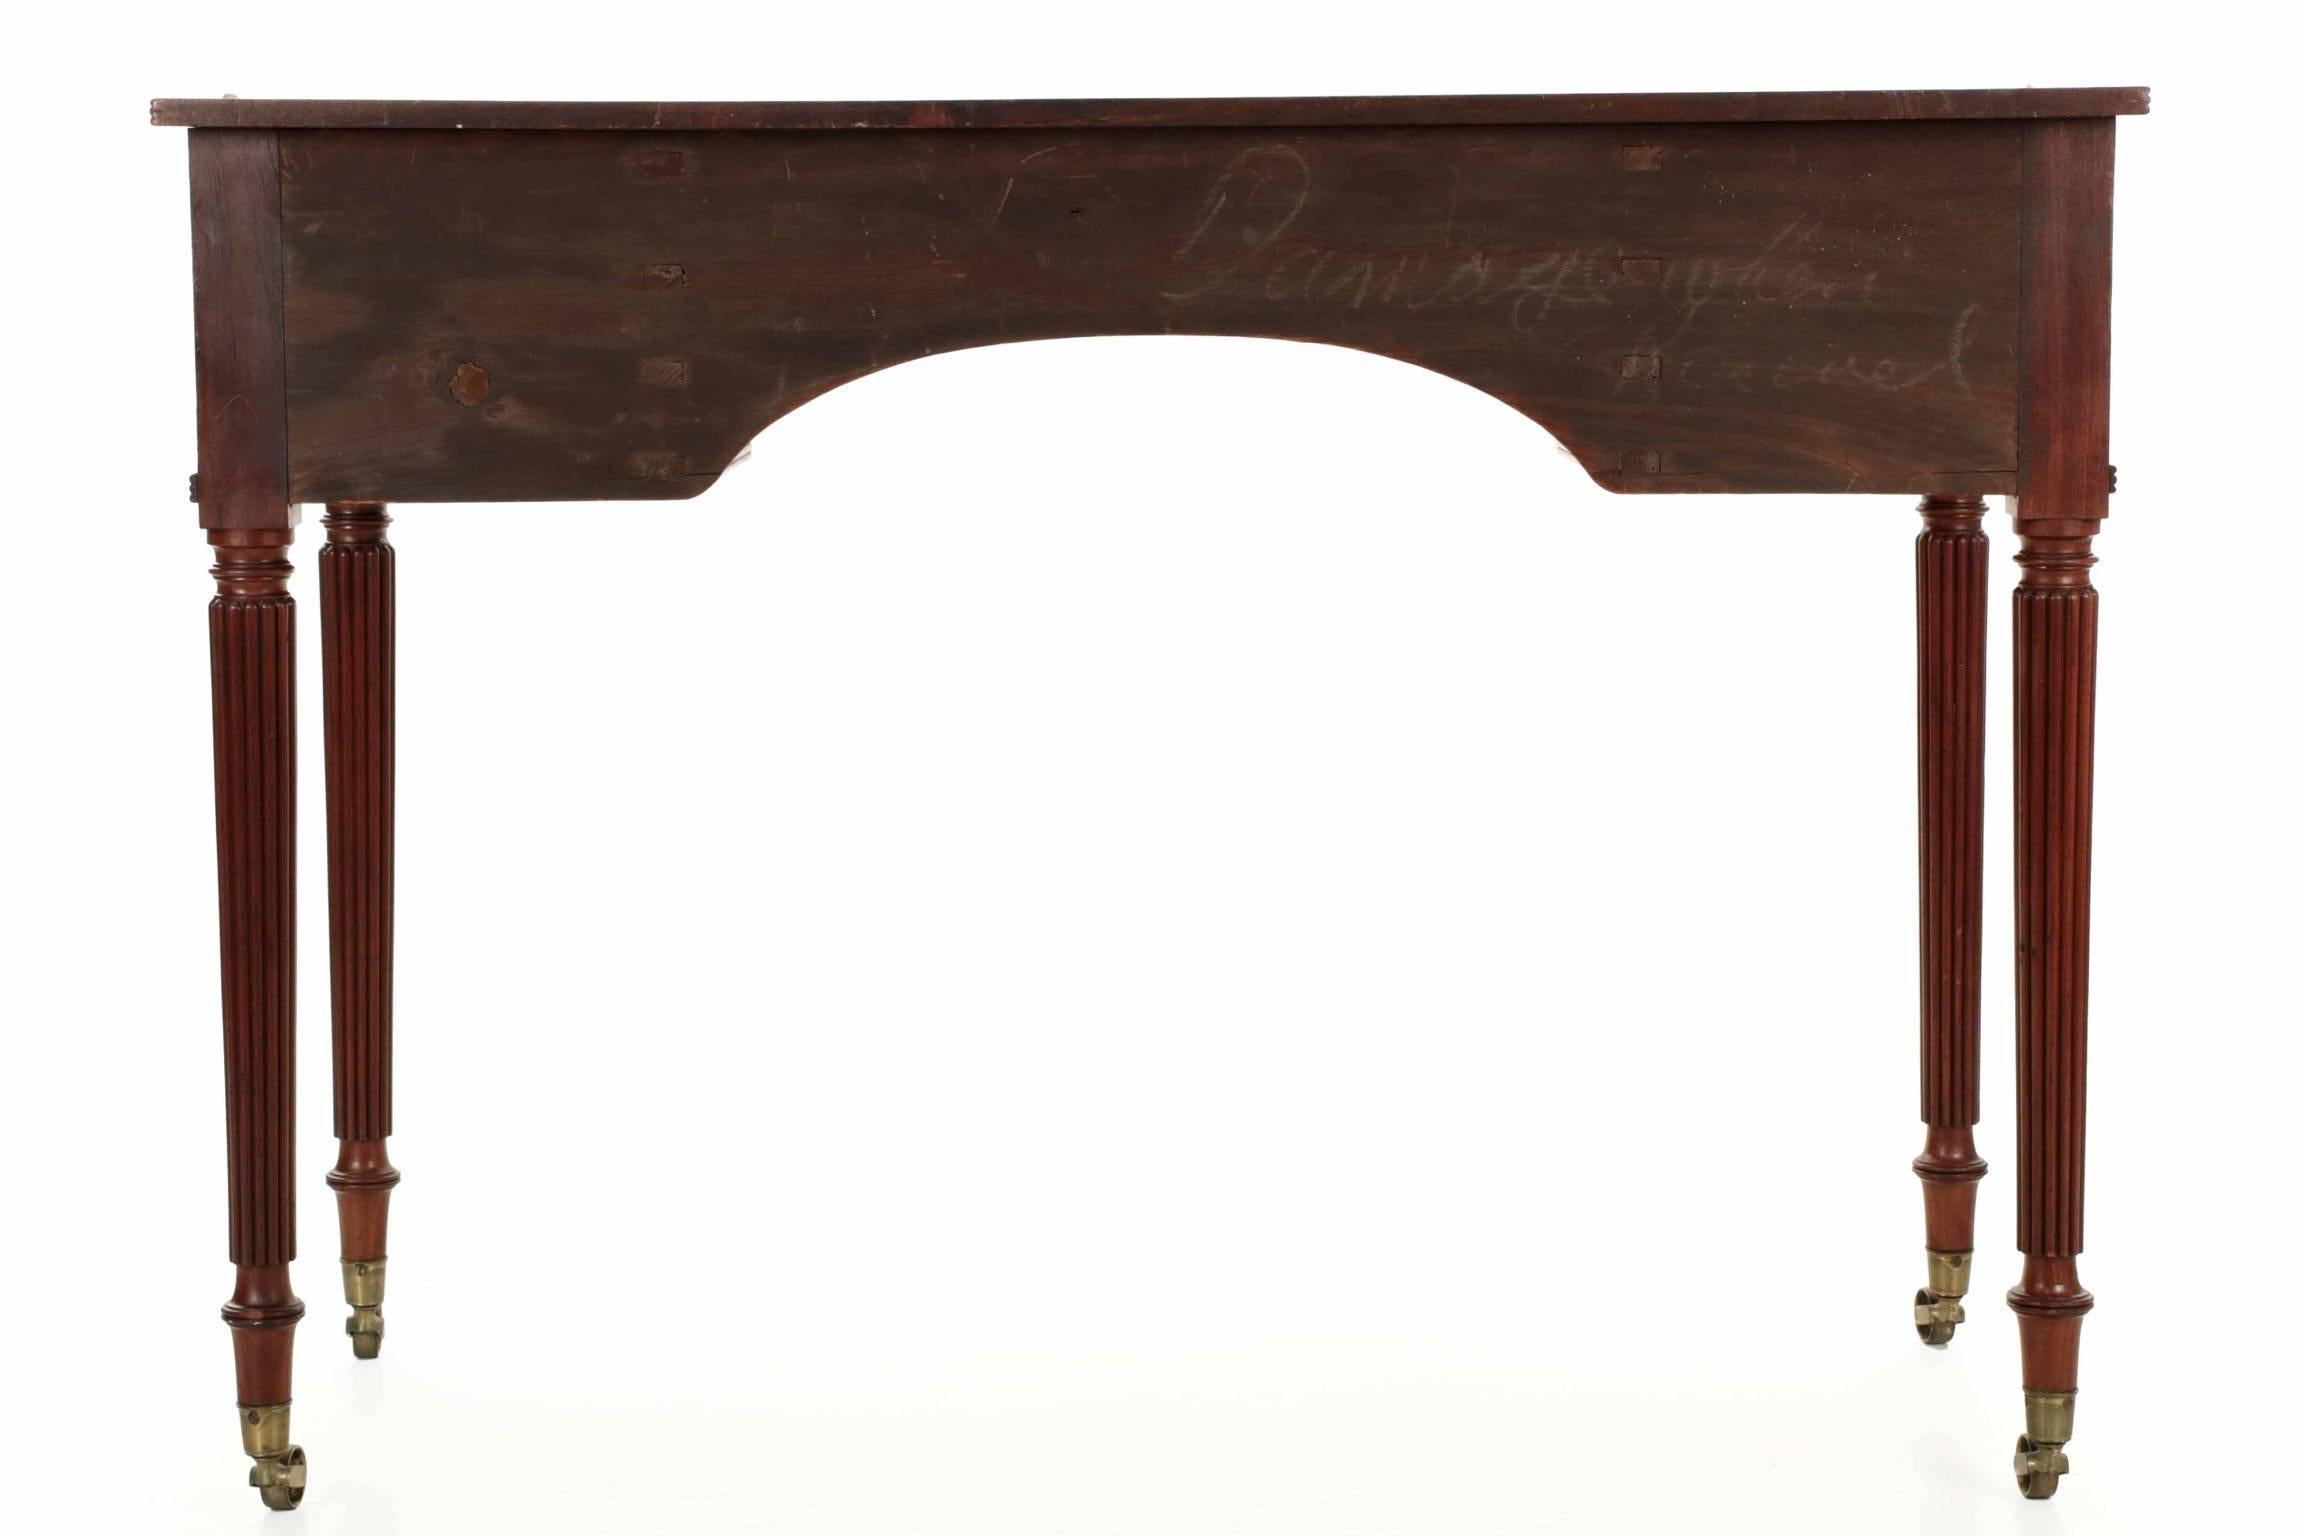 English Regency Period Mahogany & Leather Antique Writing Desk Table c. 1815-30 1